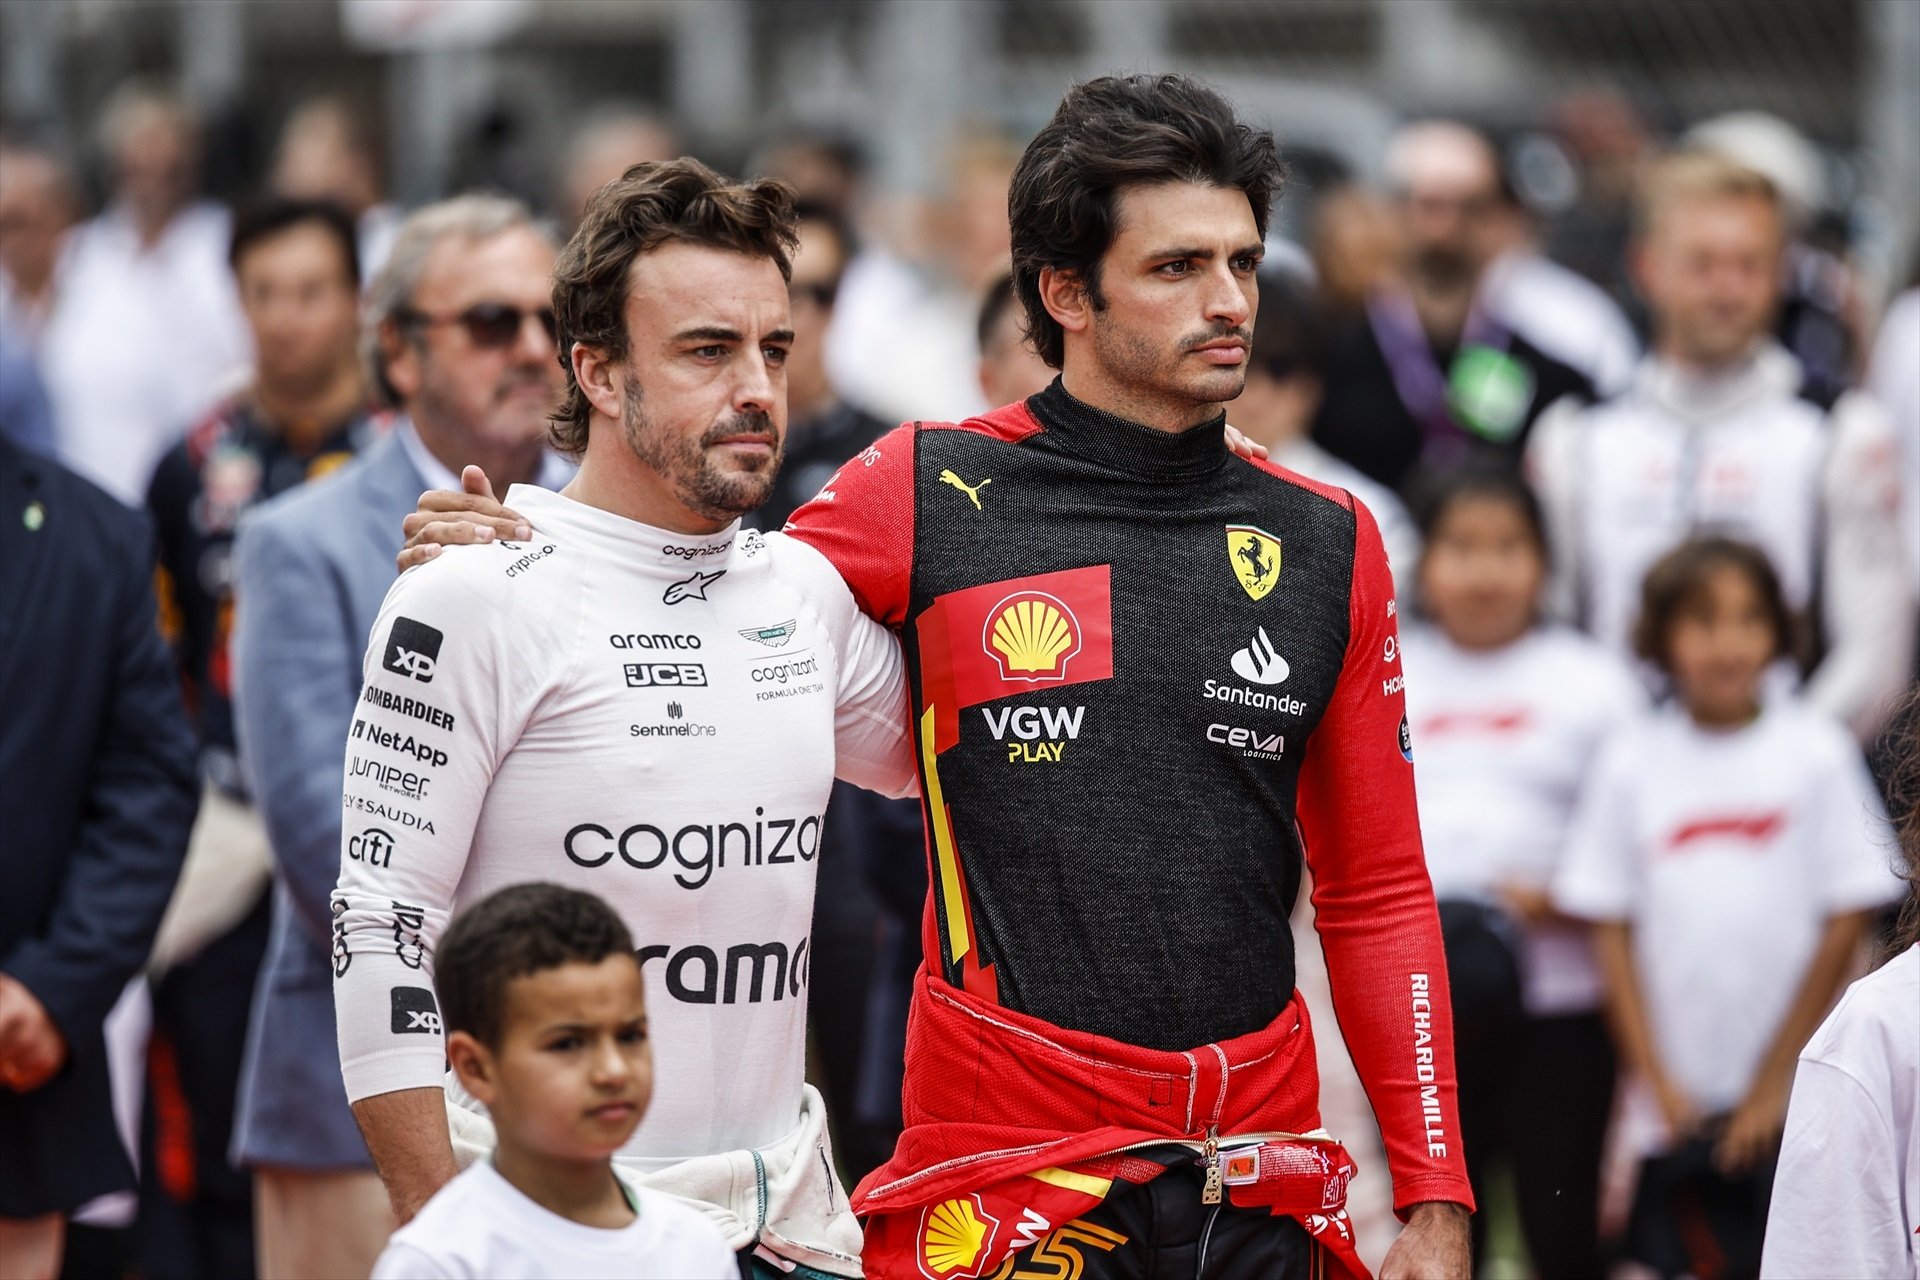 Fernando Alonso, gelosia malaltissa de Carlos Sainz trenca l'amistat